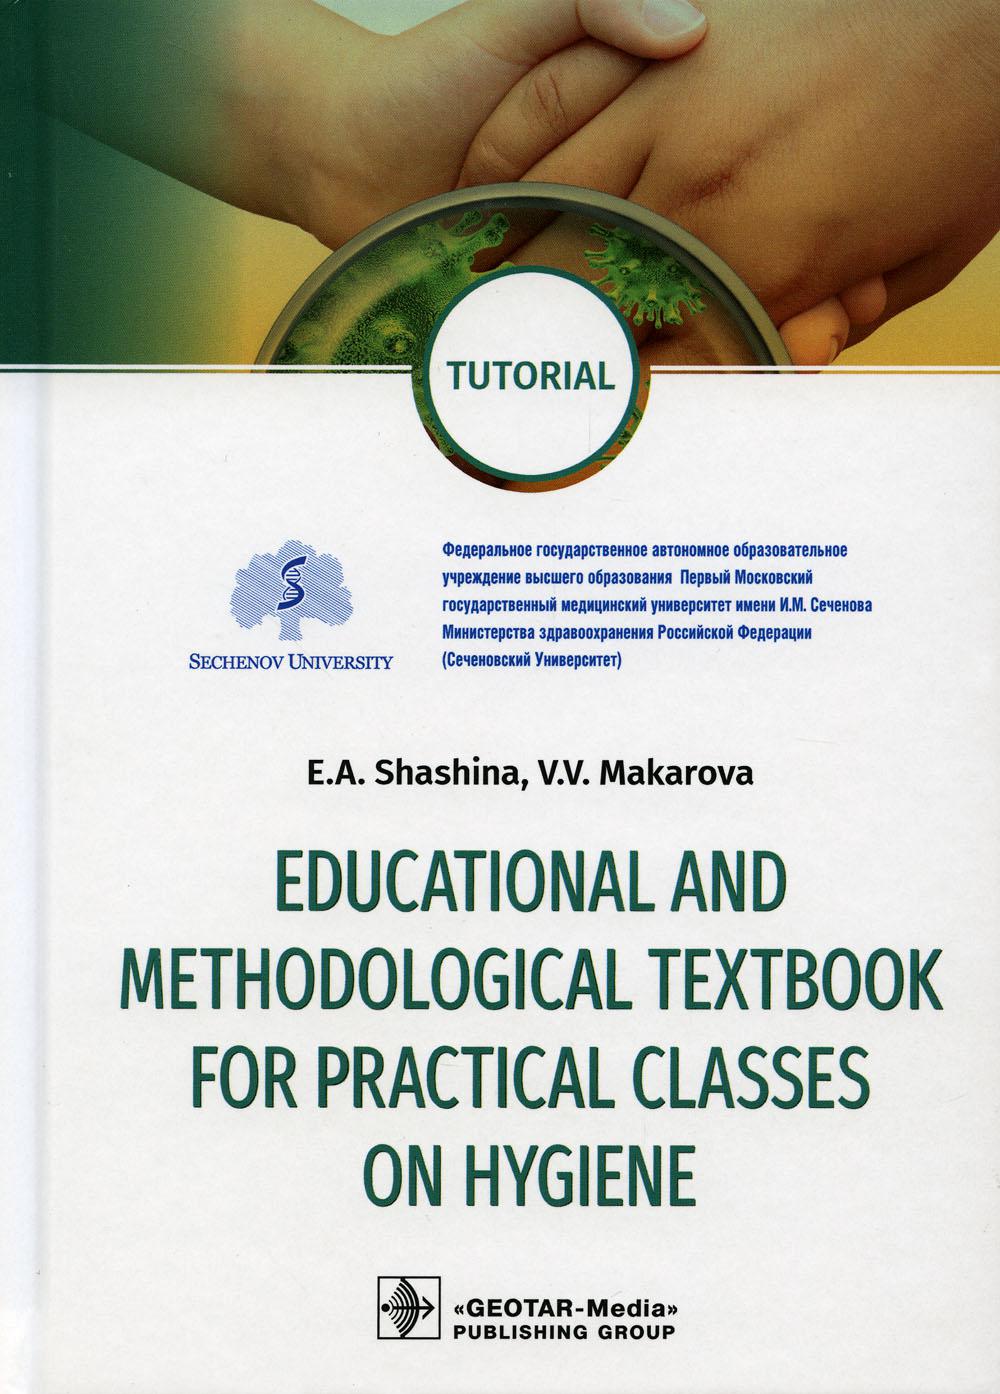 Educational and methodological textbook for practical classes on hygiene: tutorial / E. A. Shashina, V. V. Makarova. — М. : GEOTAR-Media, 2020. — 208 p. : il. — DOI: 10.33029/9704-5289-9 -HEM-2020-1-208.